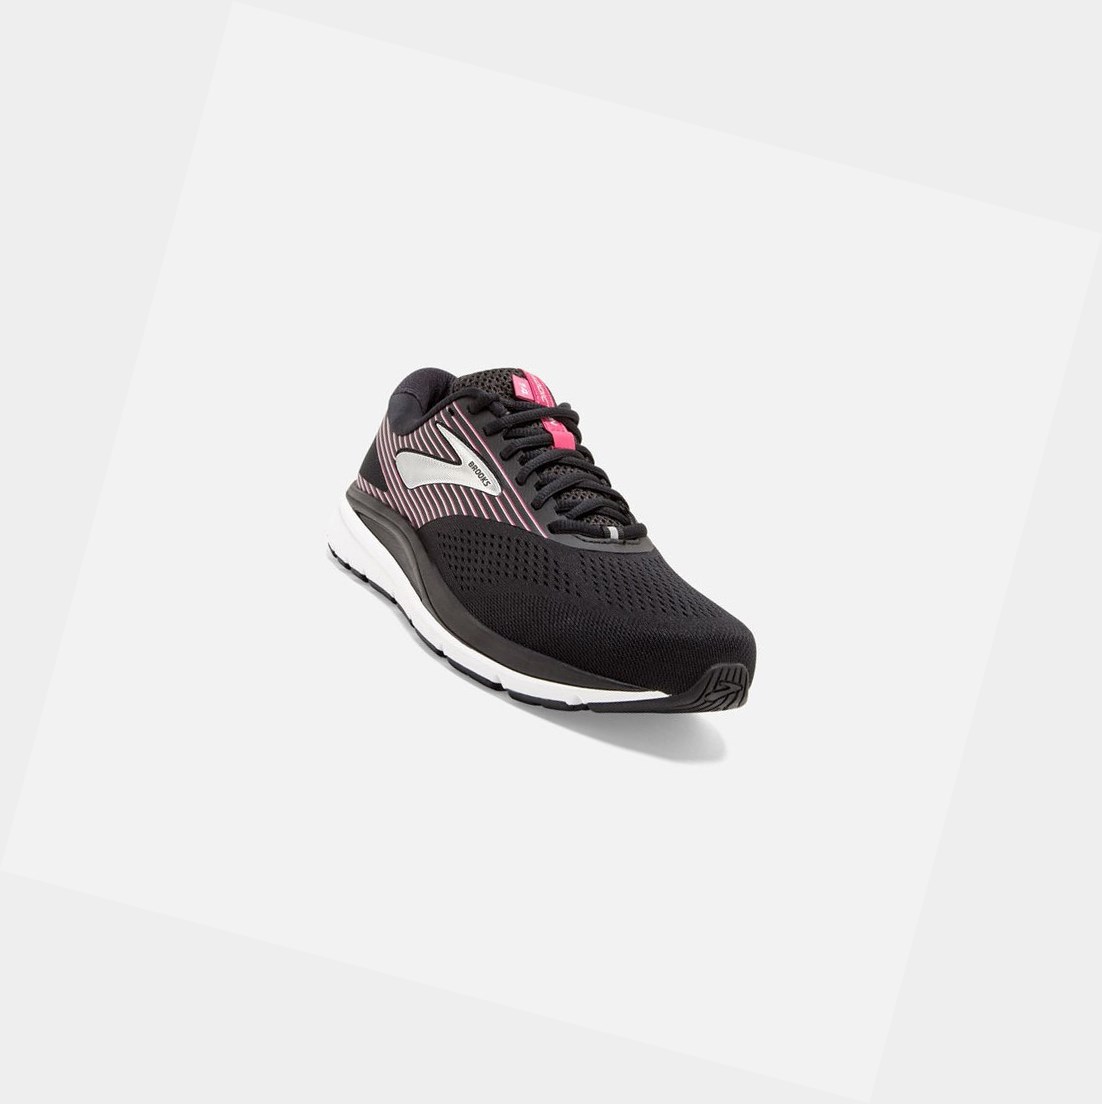 Brooks Addiction 14 Women's Road Running Shoes Black / Hot Pink / Silver | RHAQ-96074